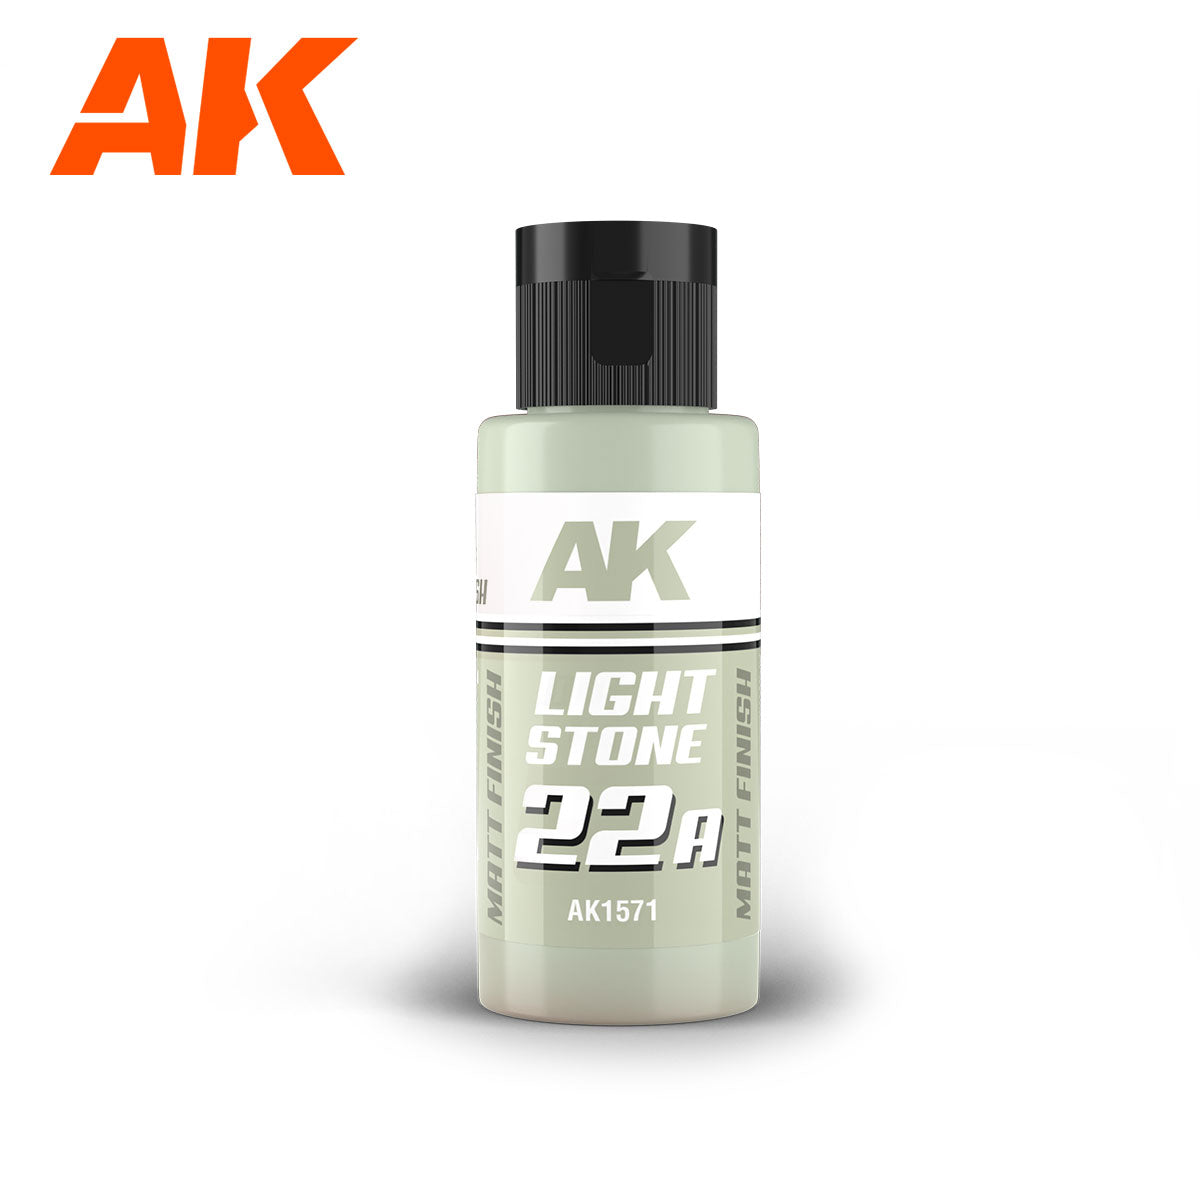 AK Interactive Dual Exo 22A - Light Stone 60ml